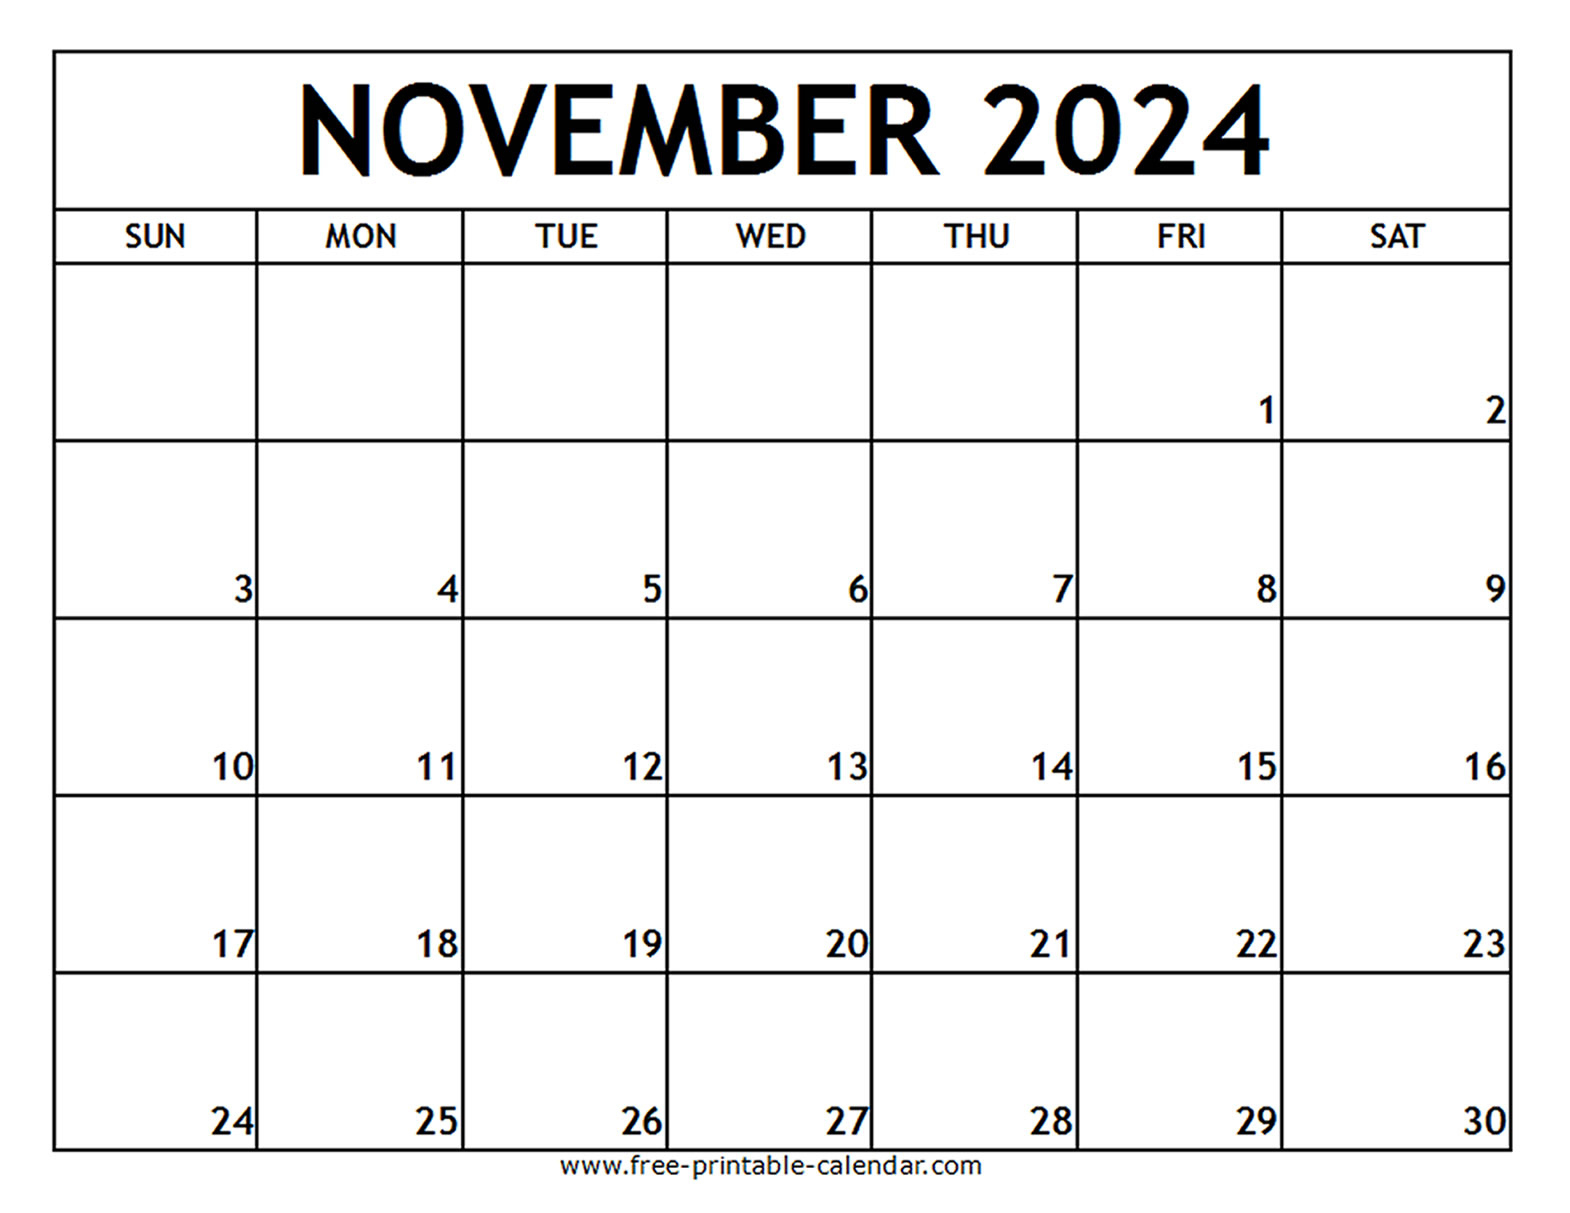 November 2024 Printable Calendar - Free-Printable-Calendar | Printable Calendar 2024 November